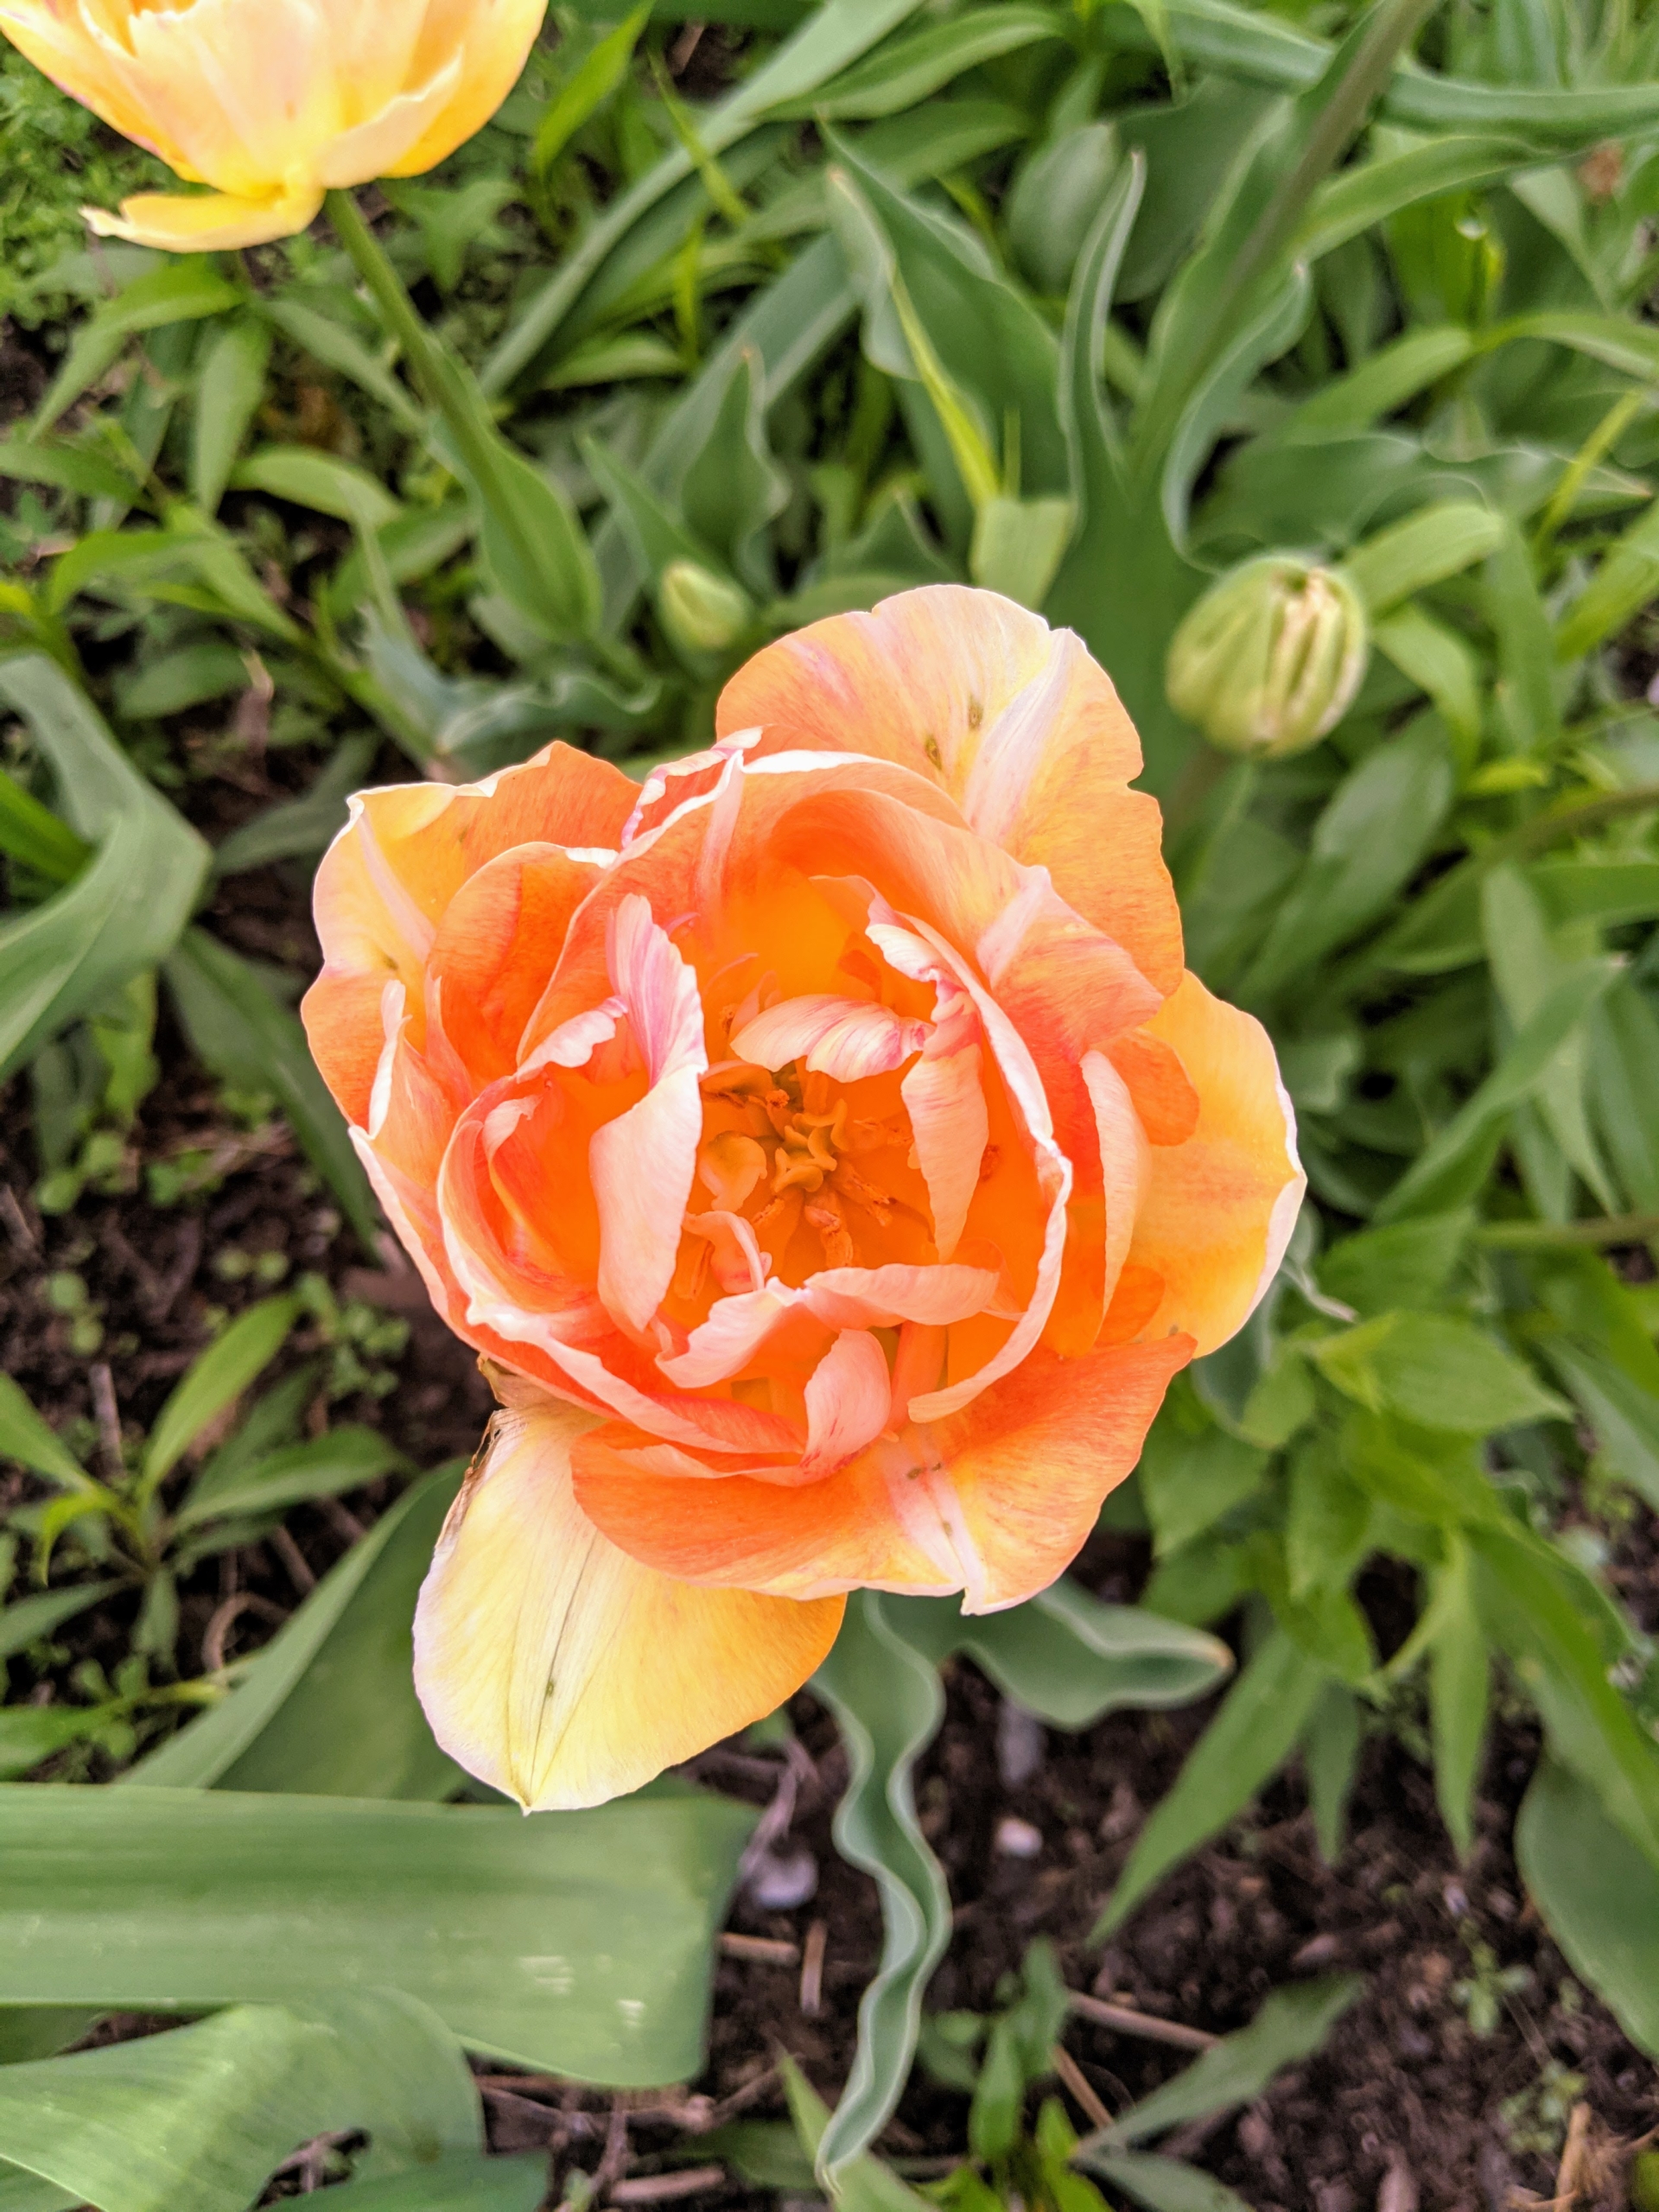 Wholesale Flowers, Peach Greenhouse Tulips